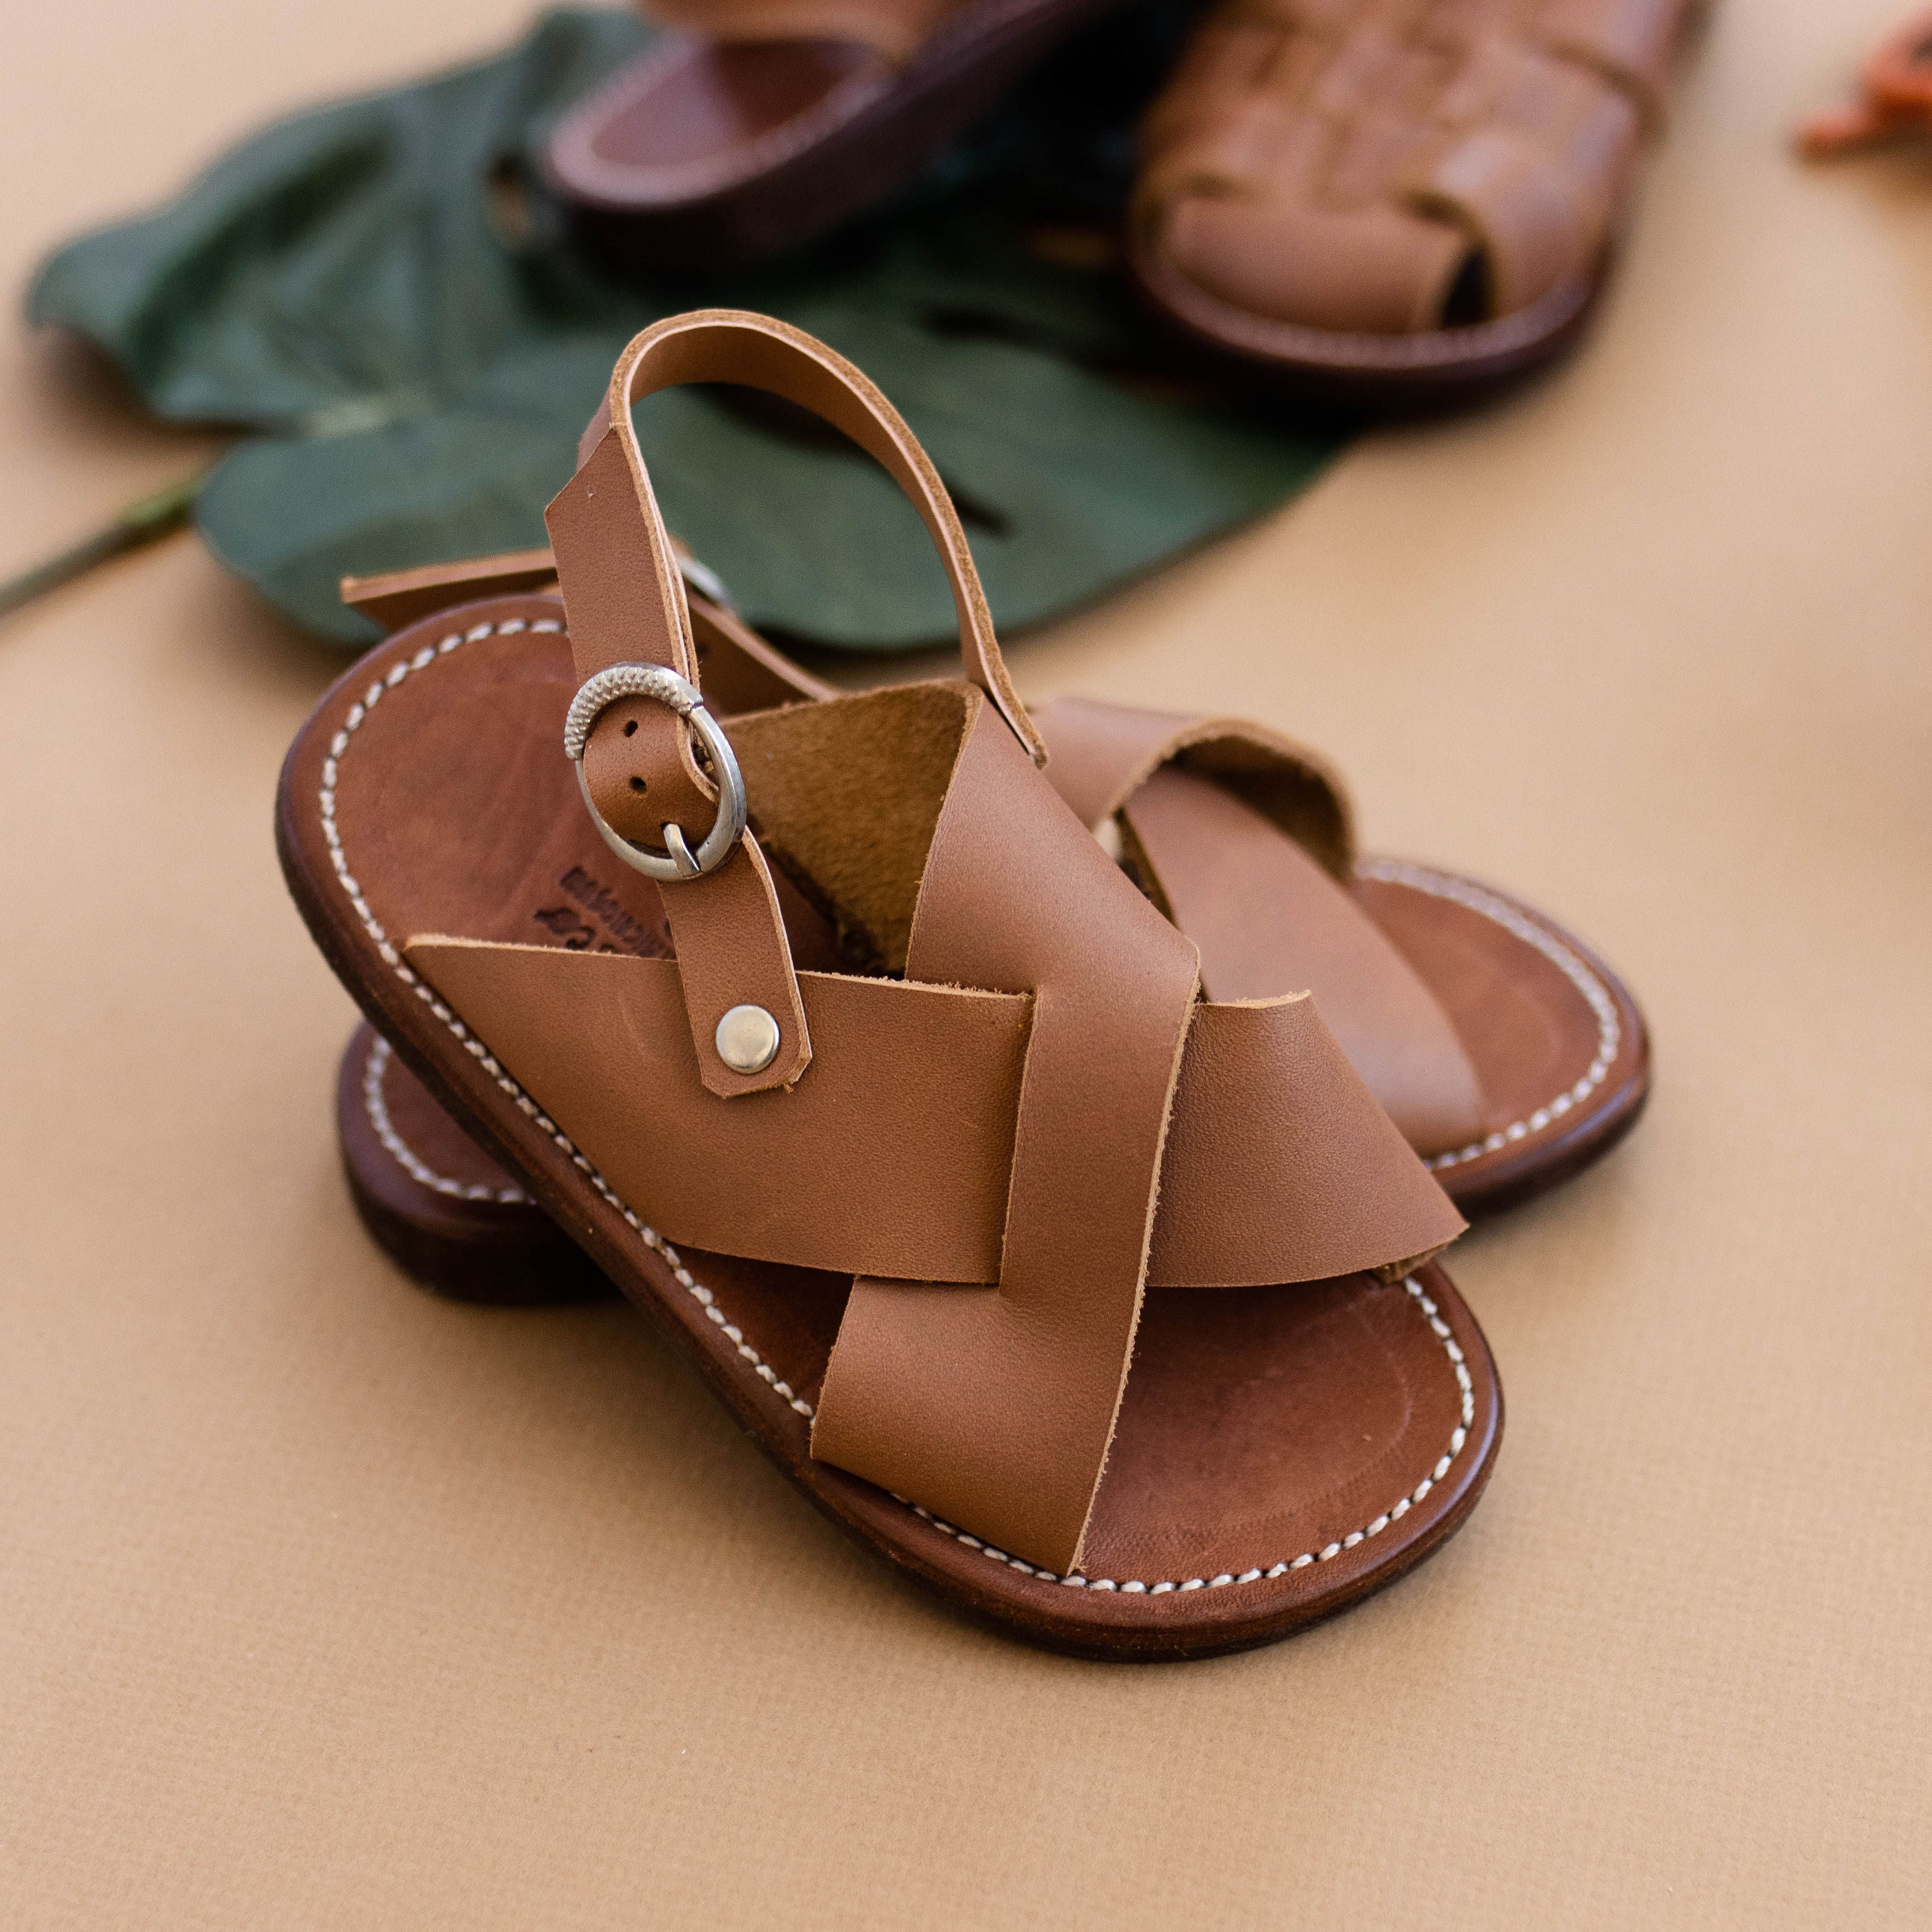 Cross strap, medium brown leather sandals for children. Unisex design.